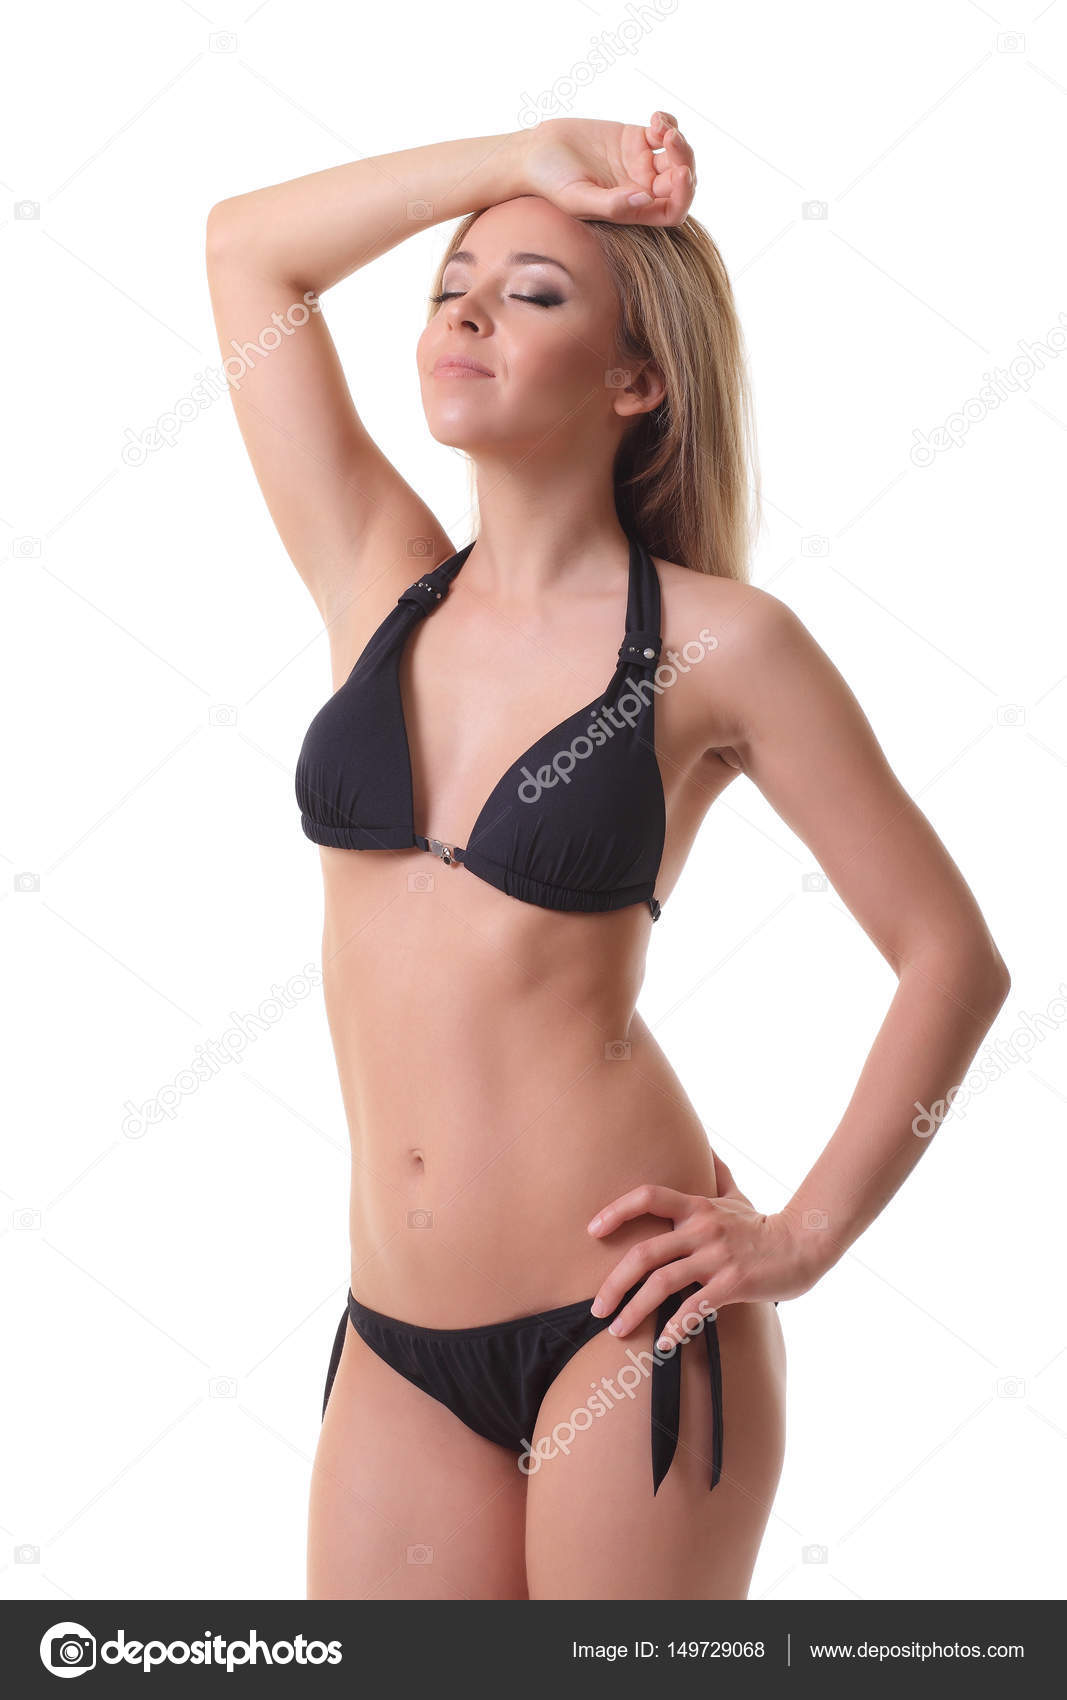 black and white girl bikini porn gallerie